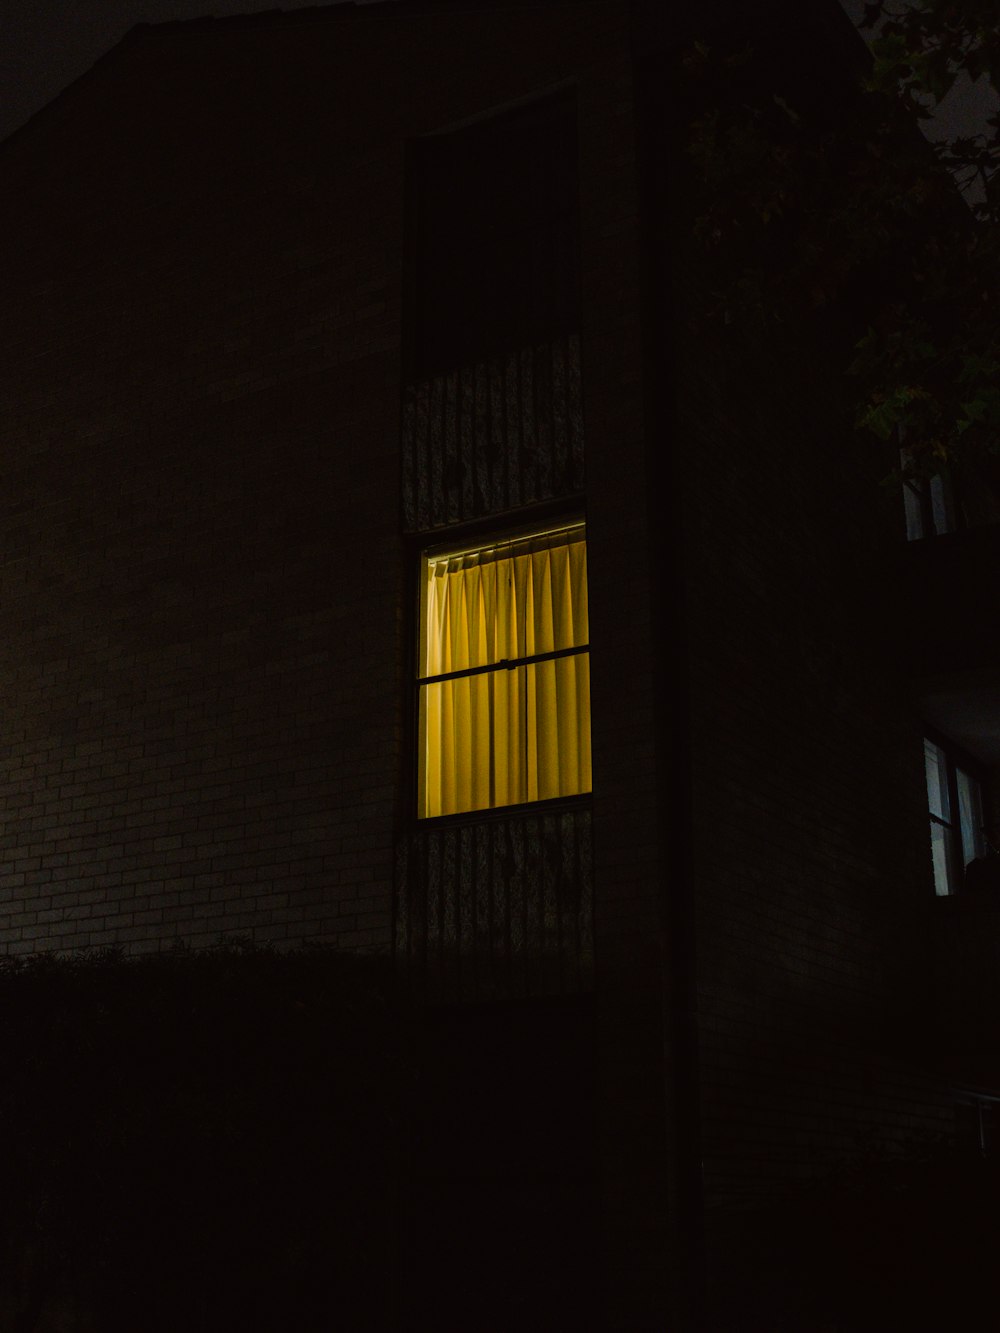 Un edificio oscuro con una ventana iluminada por la noche